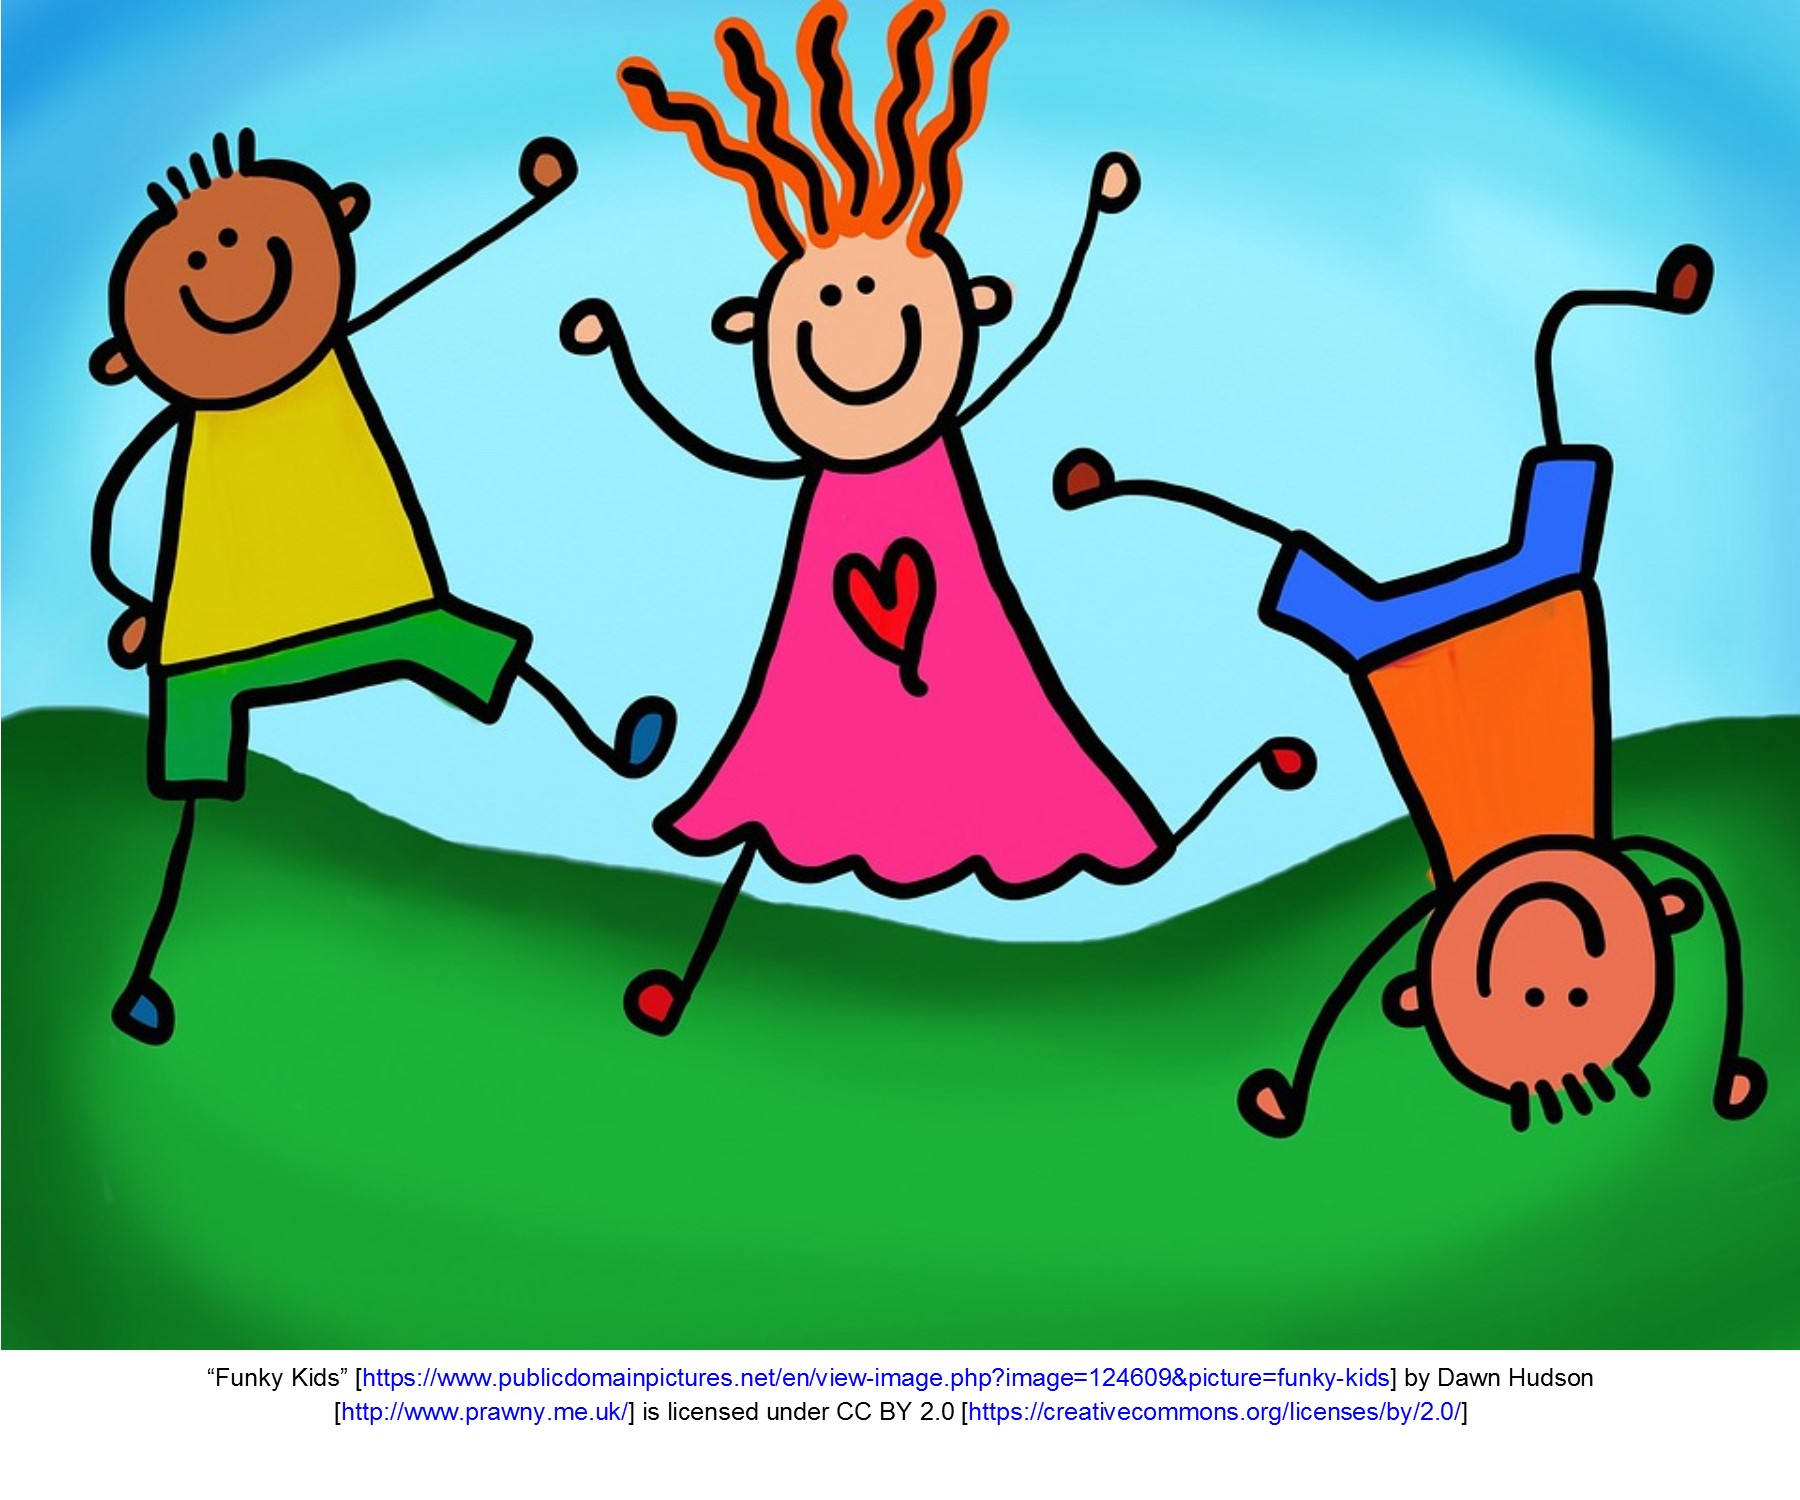 Cartoon illustration of children playing